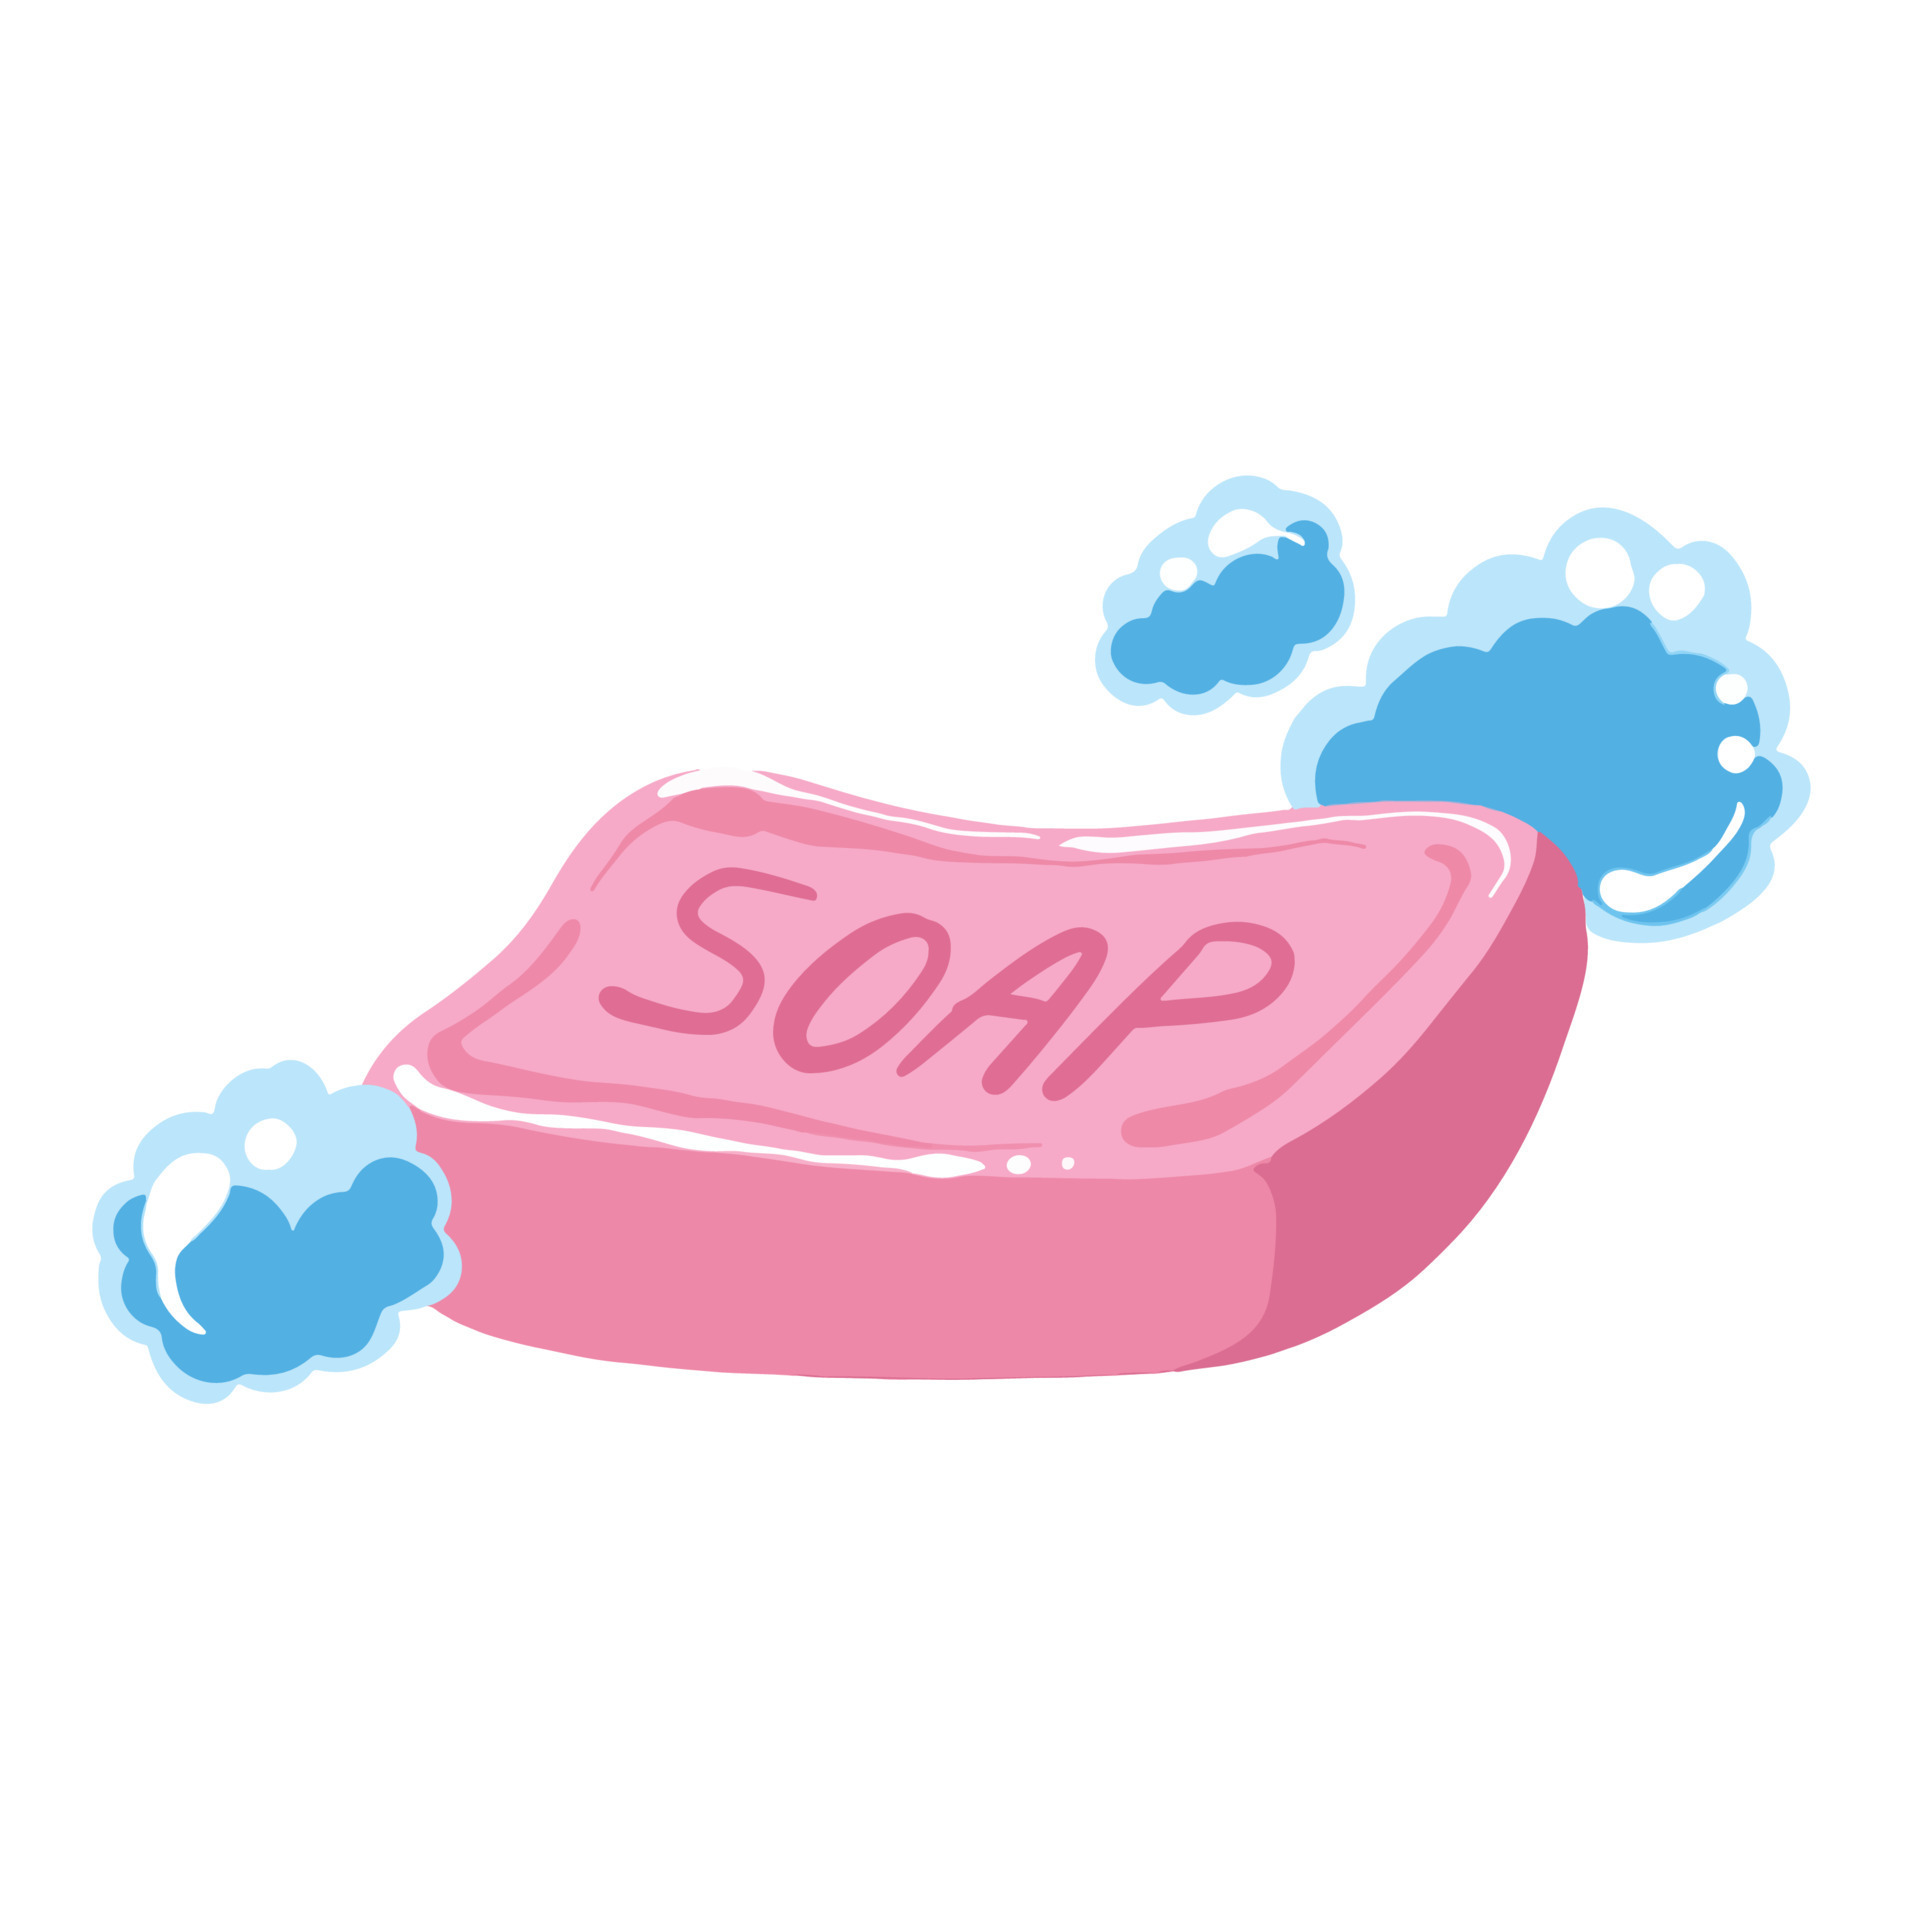 6,088 Bath Soap Line Drawing Vector Images, Stock Photos & Vectors |  Shutterstock